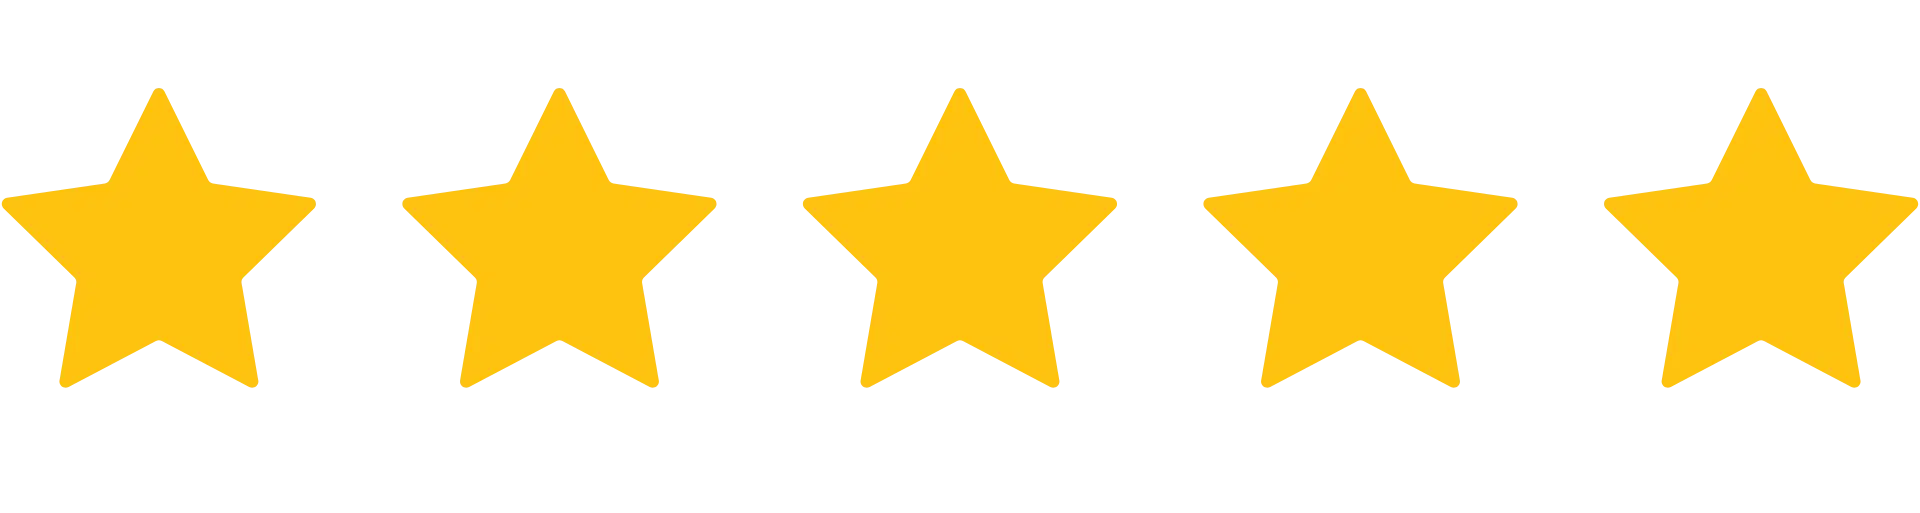 fem gule stjerner